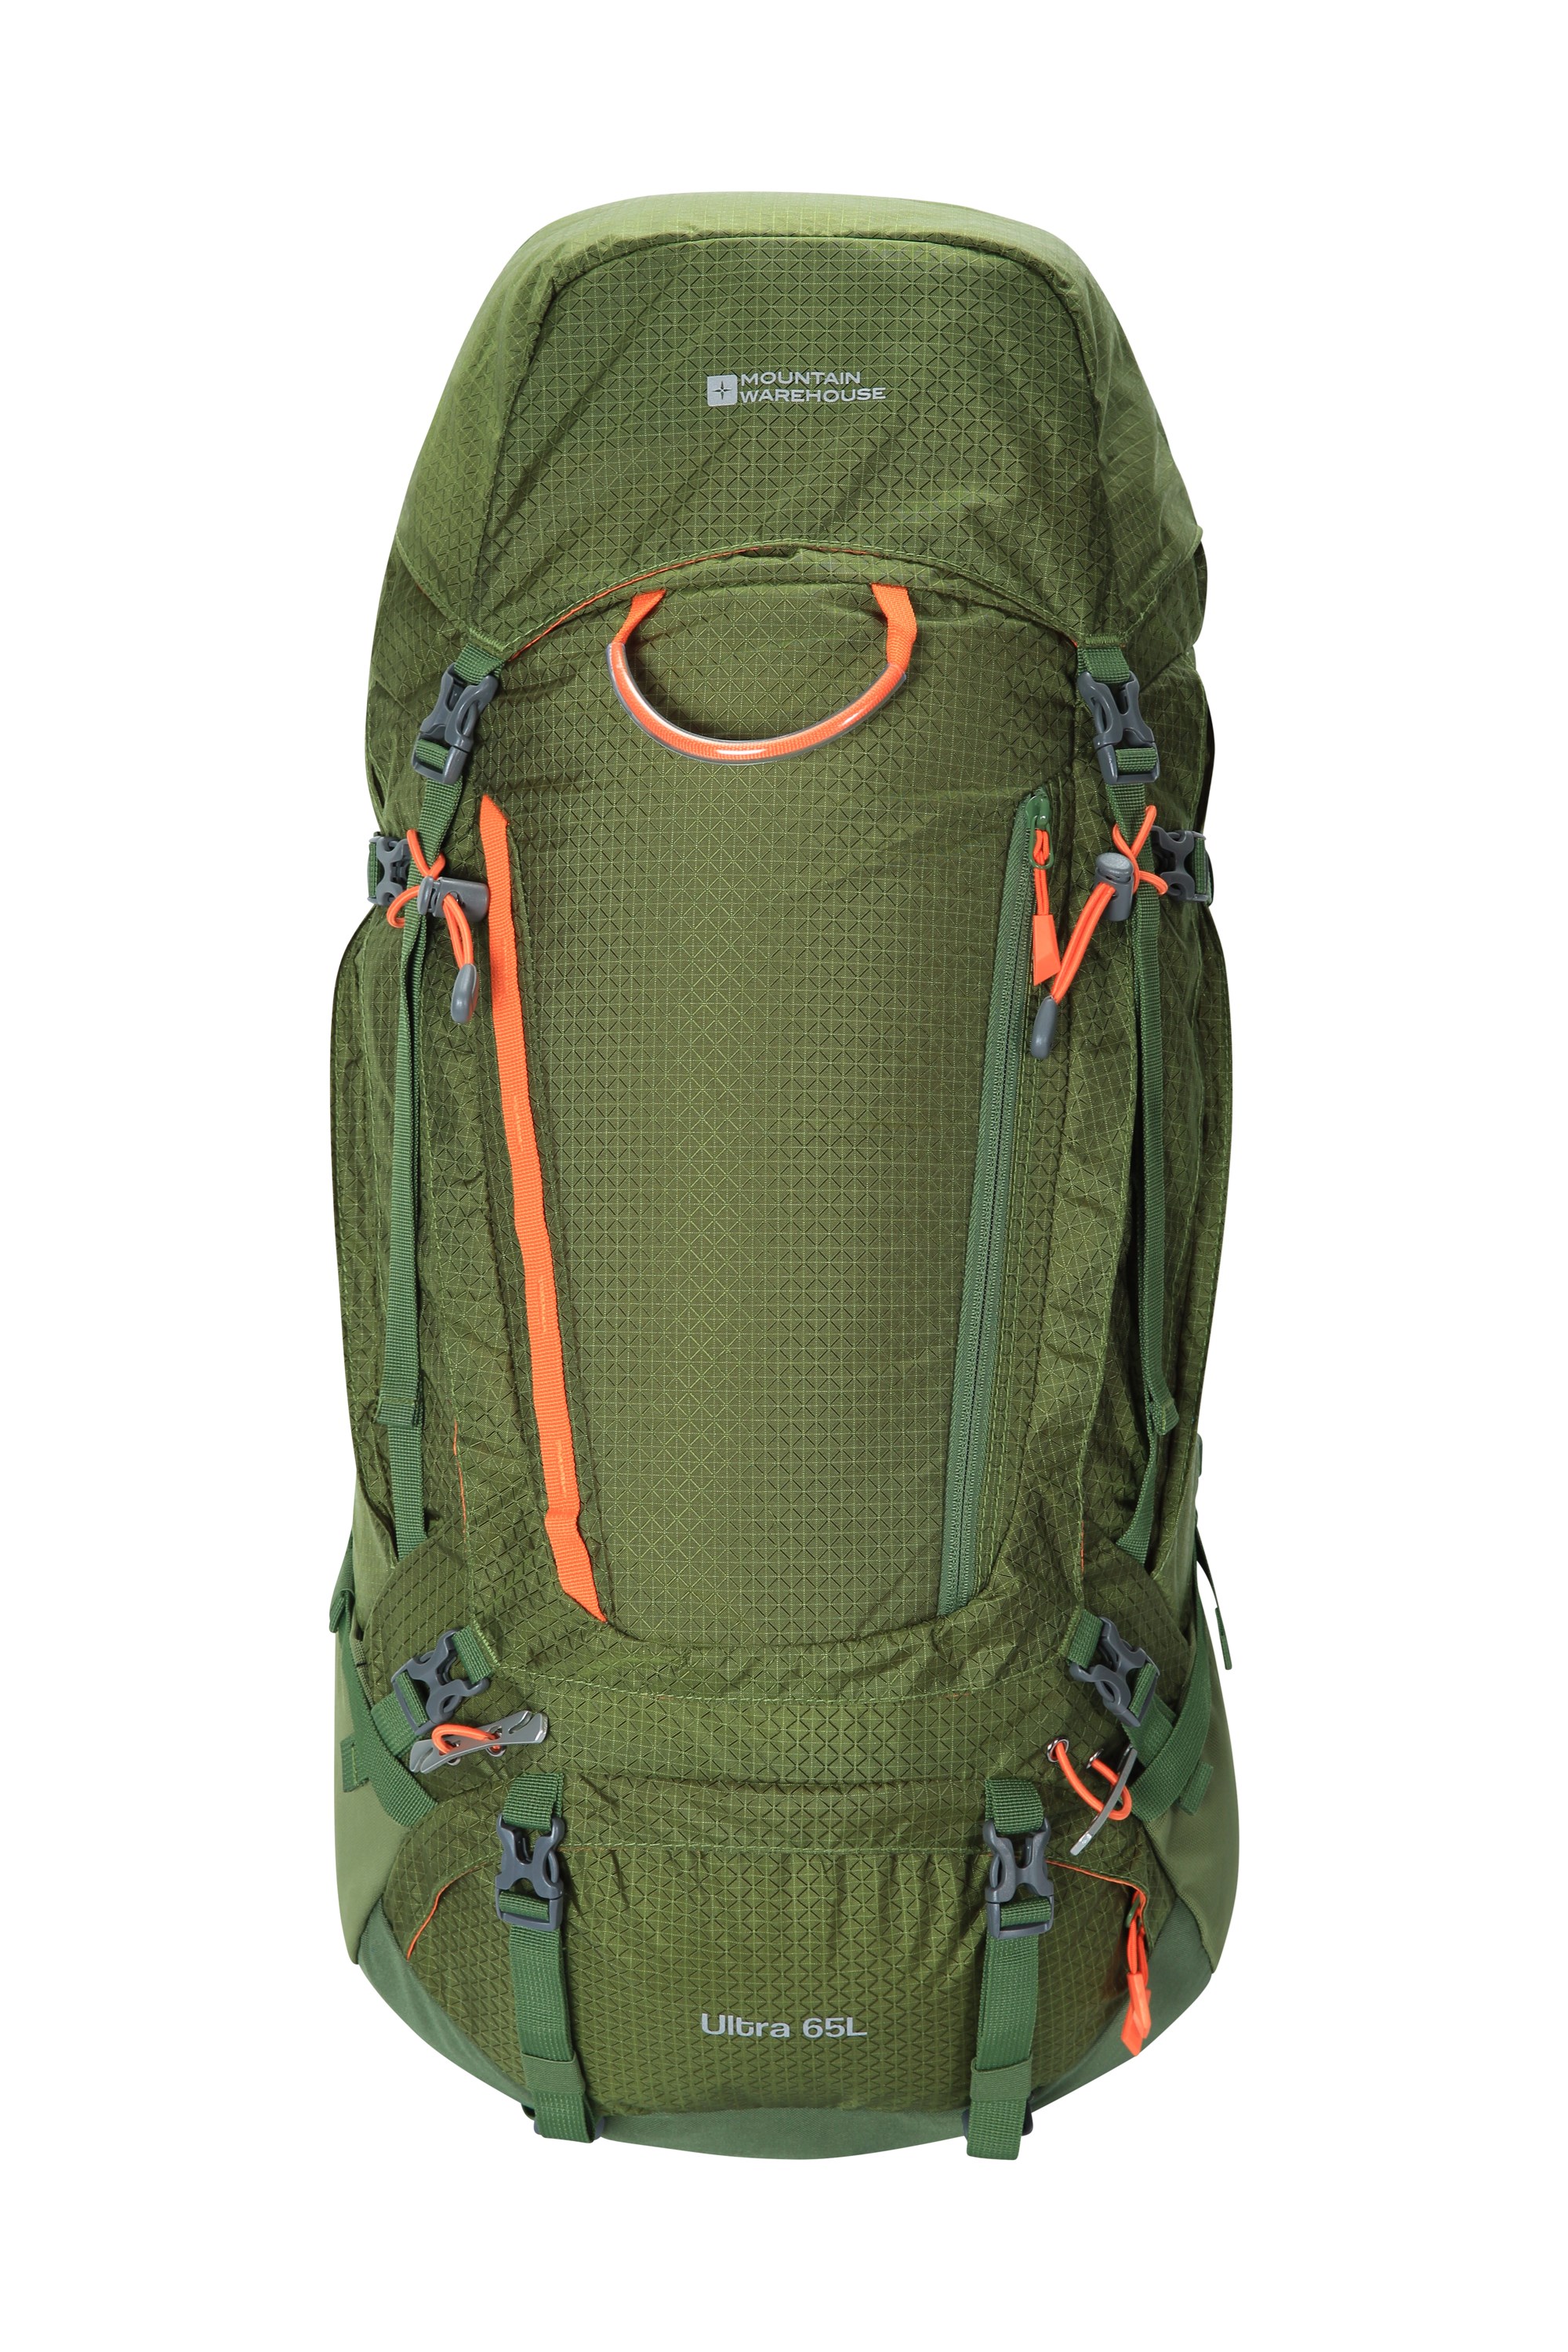 Mountain Warehouse Ultra 65L Backpack Green